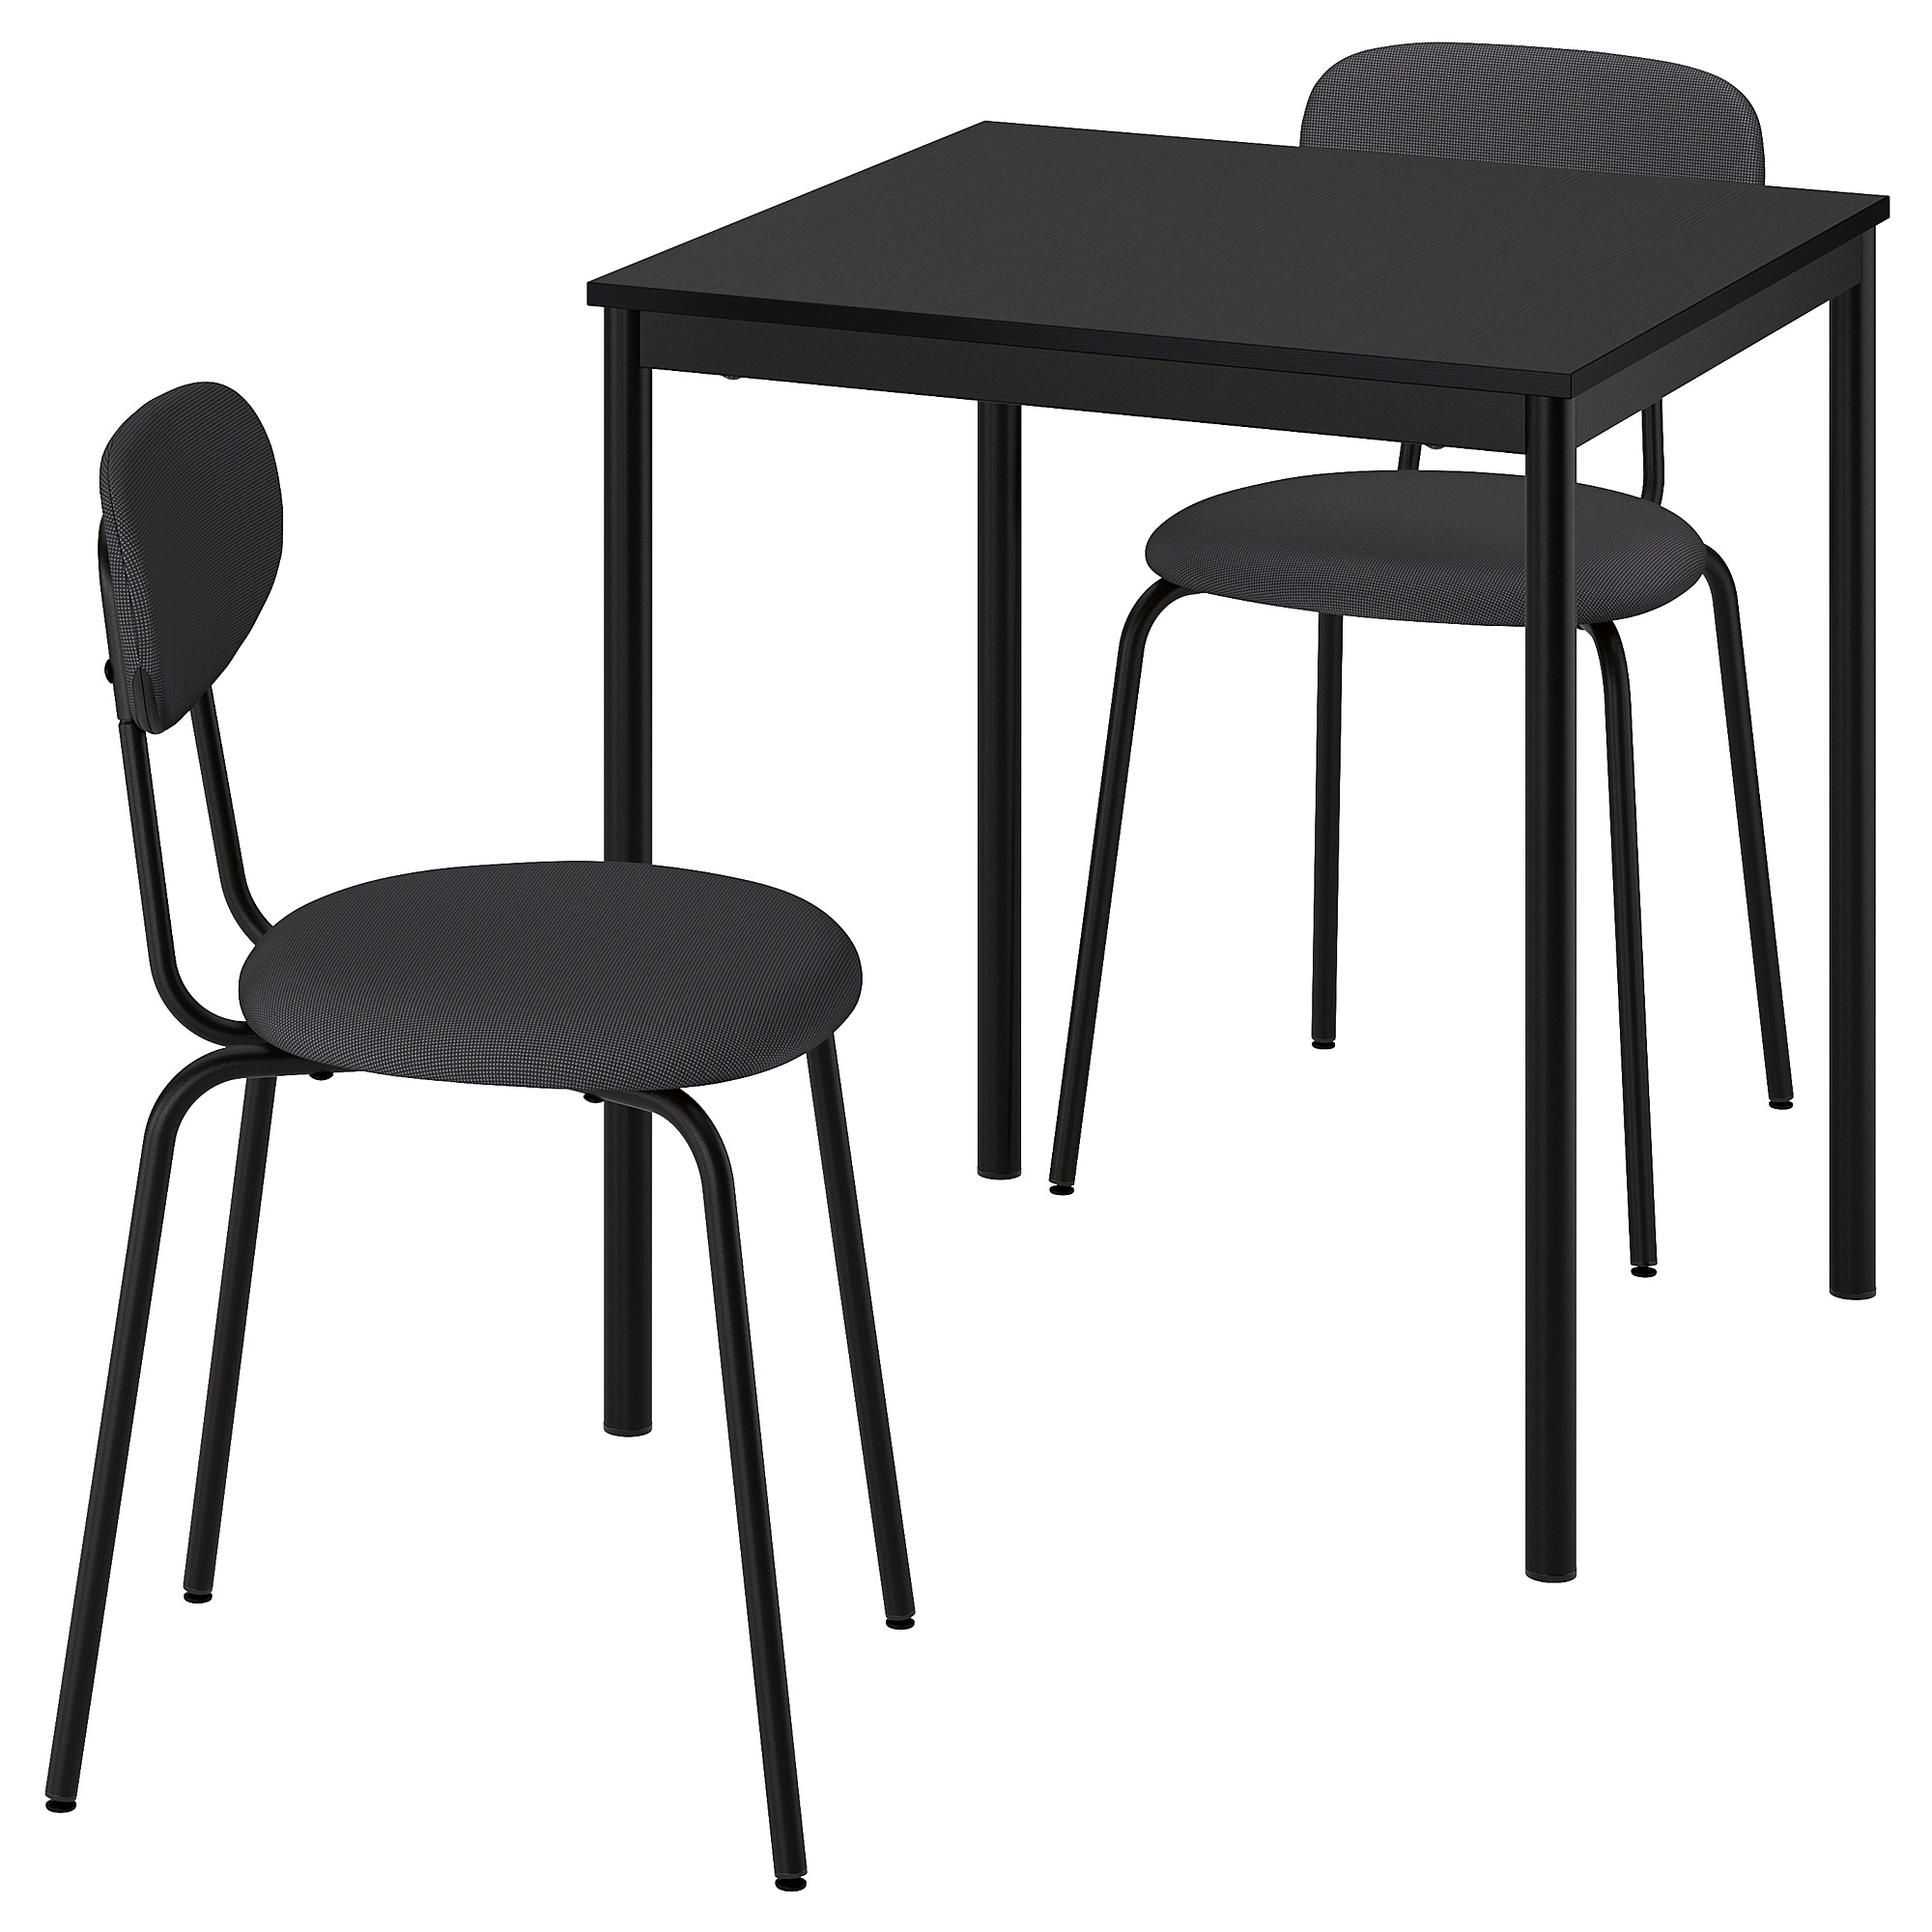 SANDSBERG/ÖSTANÖ table and 2 chairs